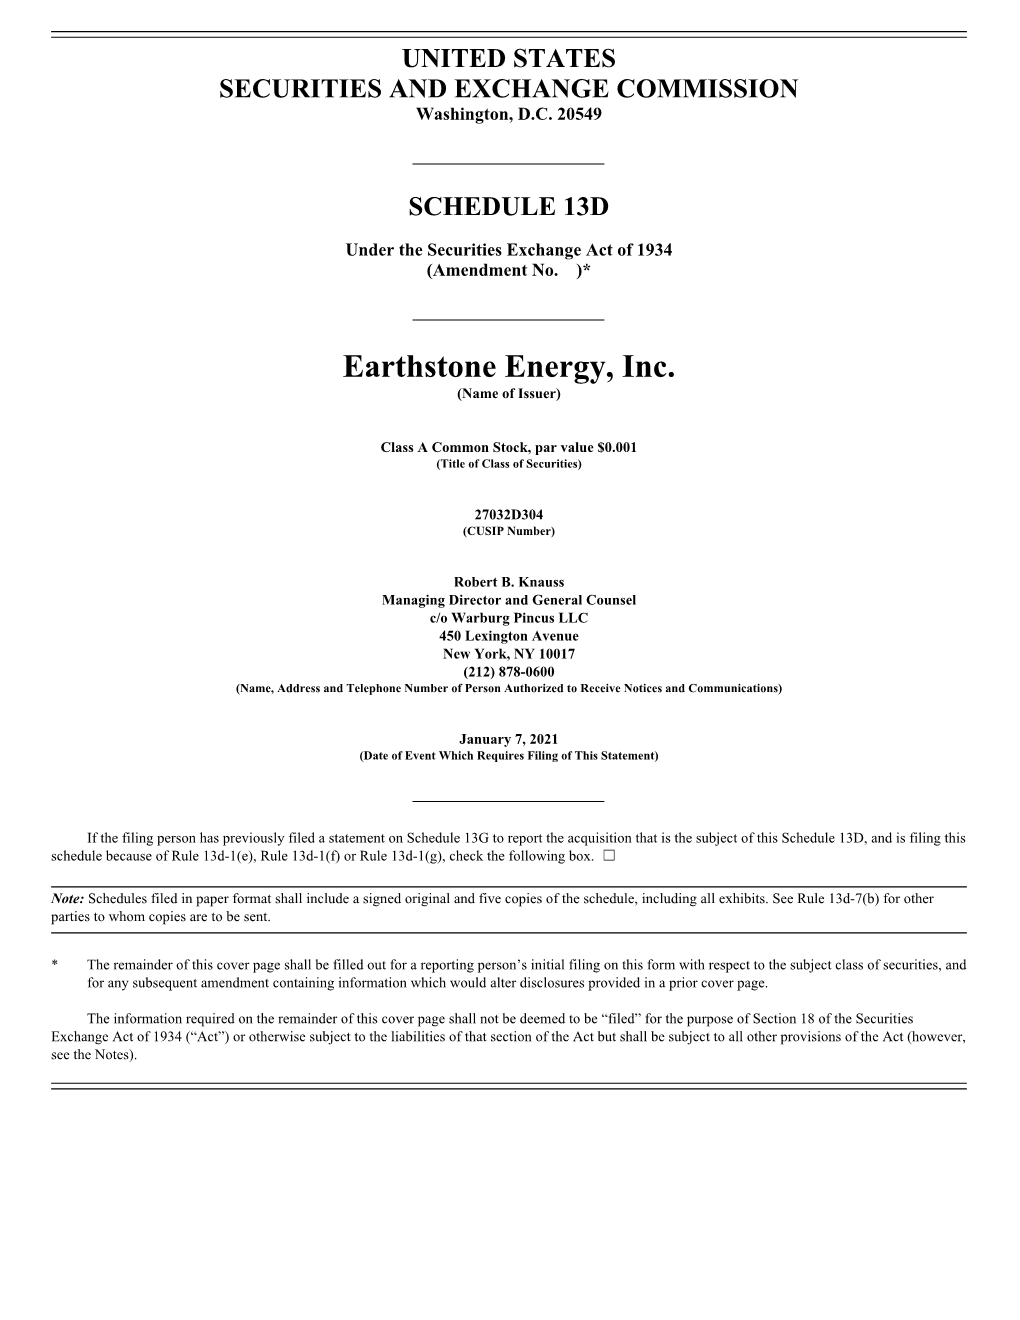 Earthstone Energy, Inc. (Name of Issuer)